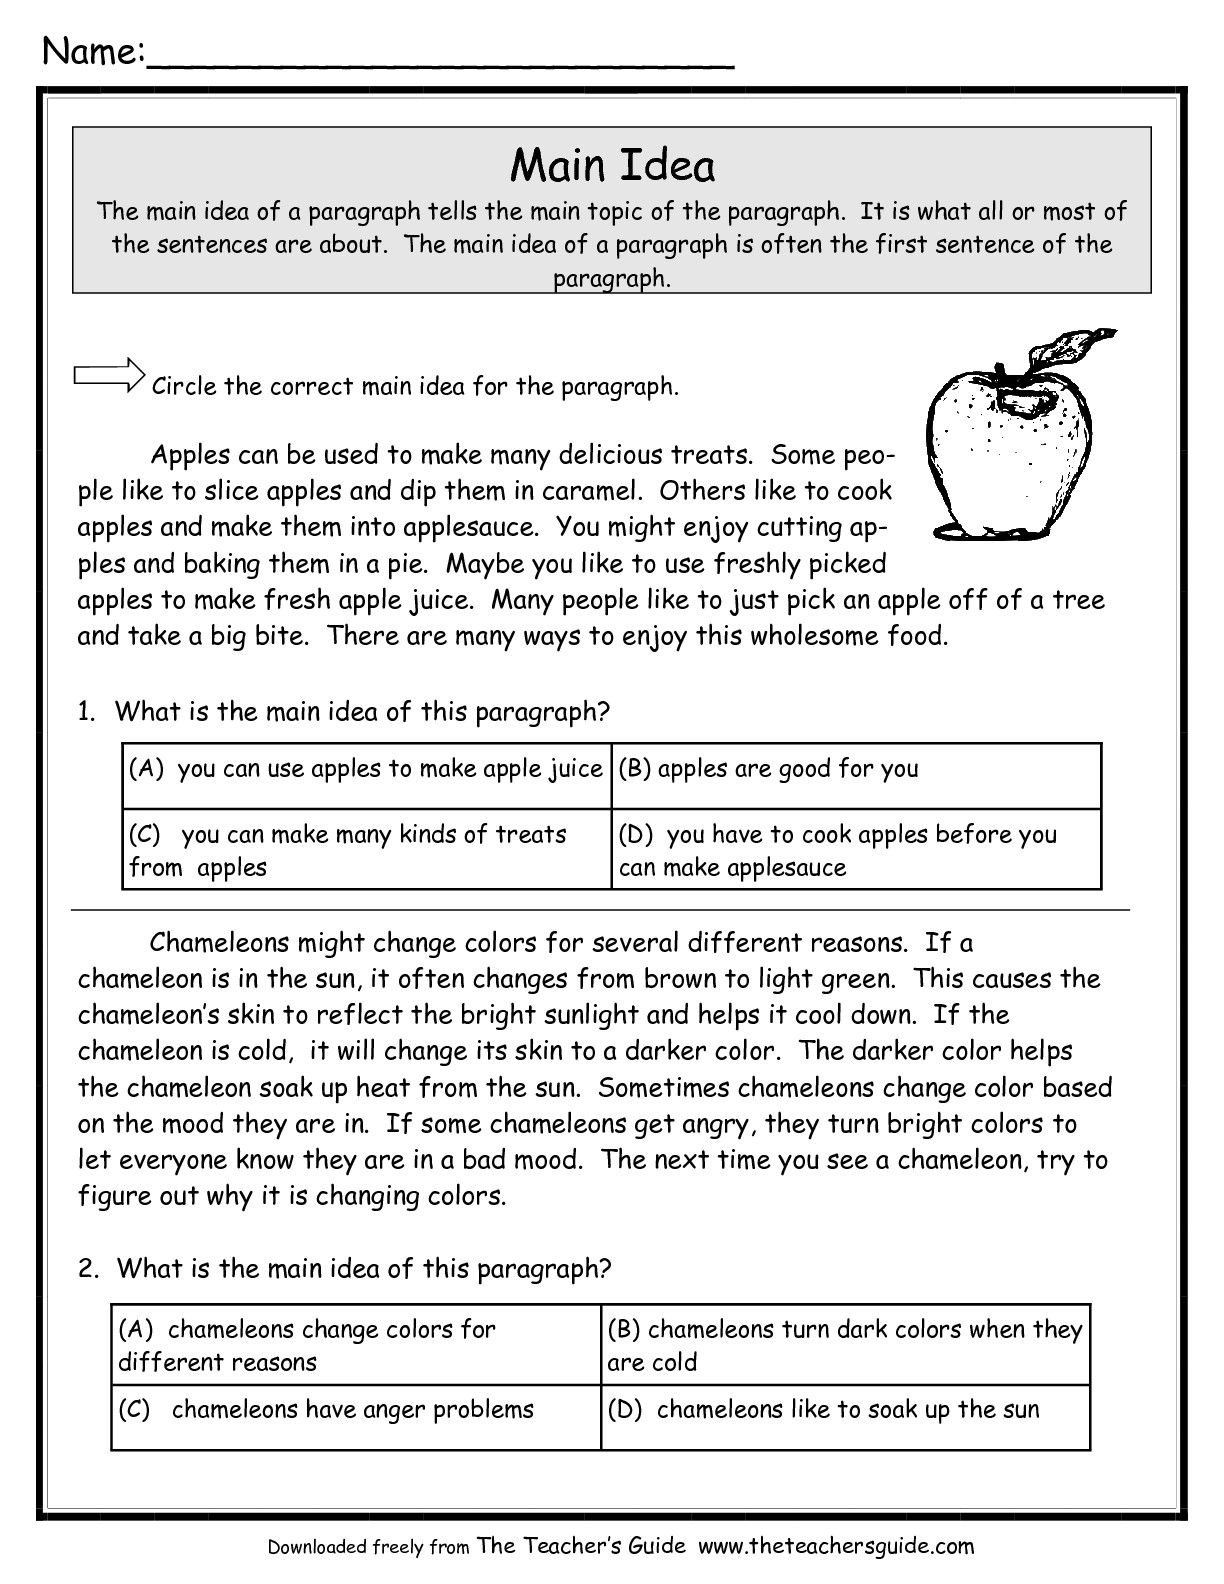 Main Idea Multiple Choice Worksheets 4th Grade